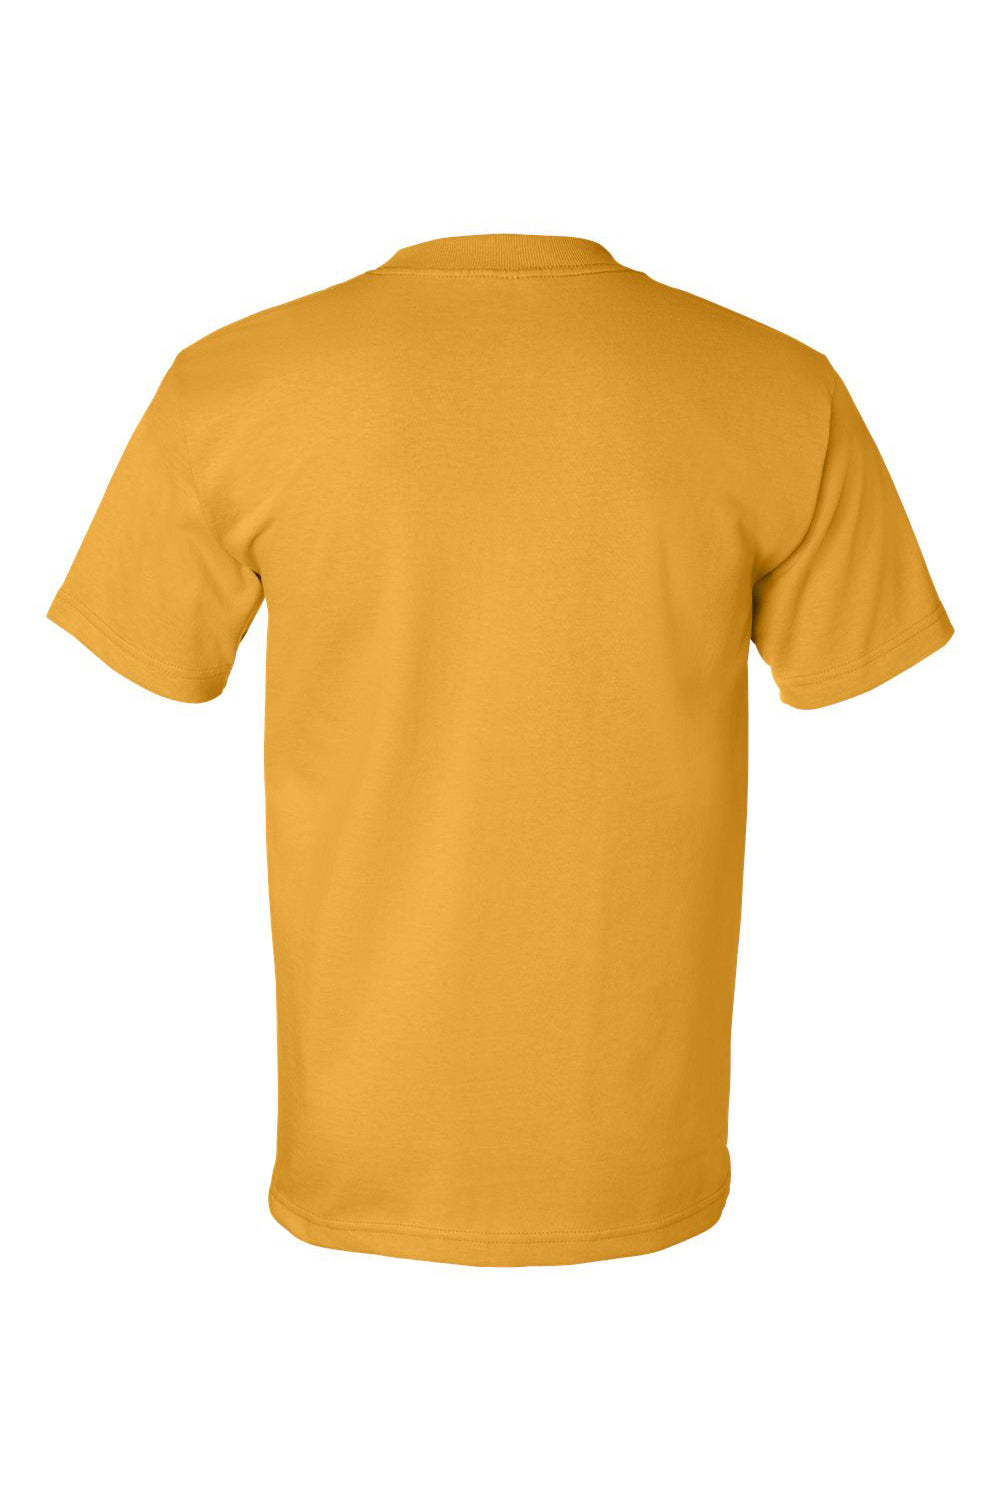 Bayside BA5100 Mens USA Made Short Sleeve Crewneck T-Shirt Gold Flat Back